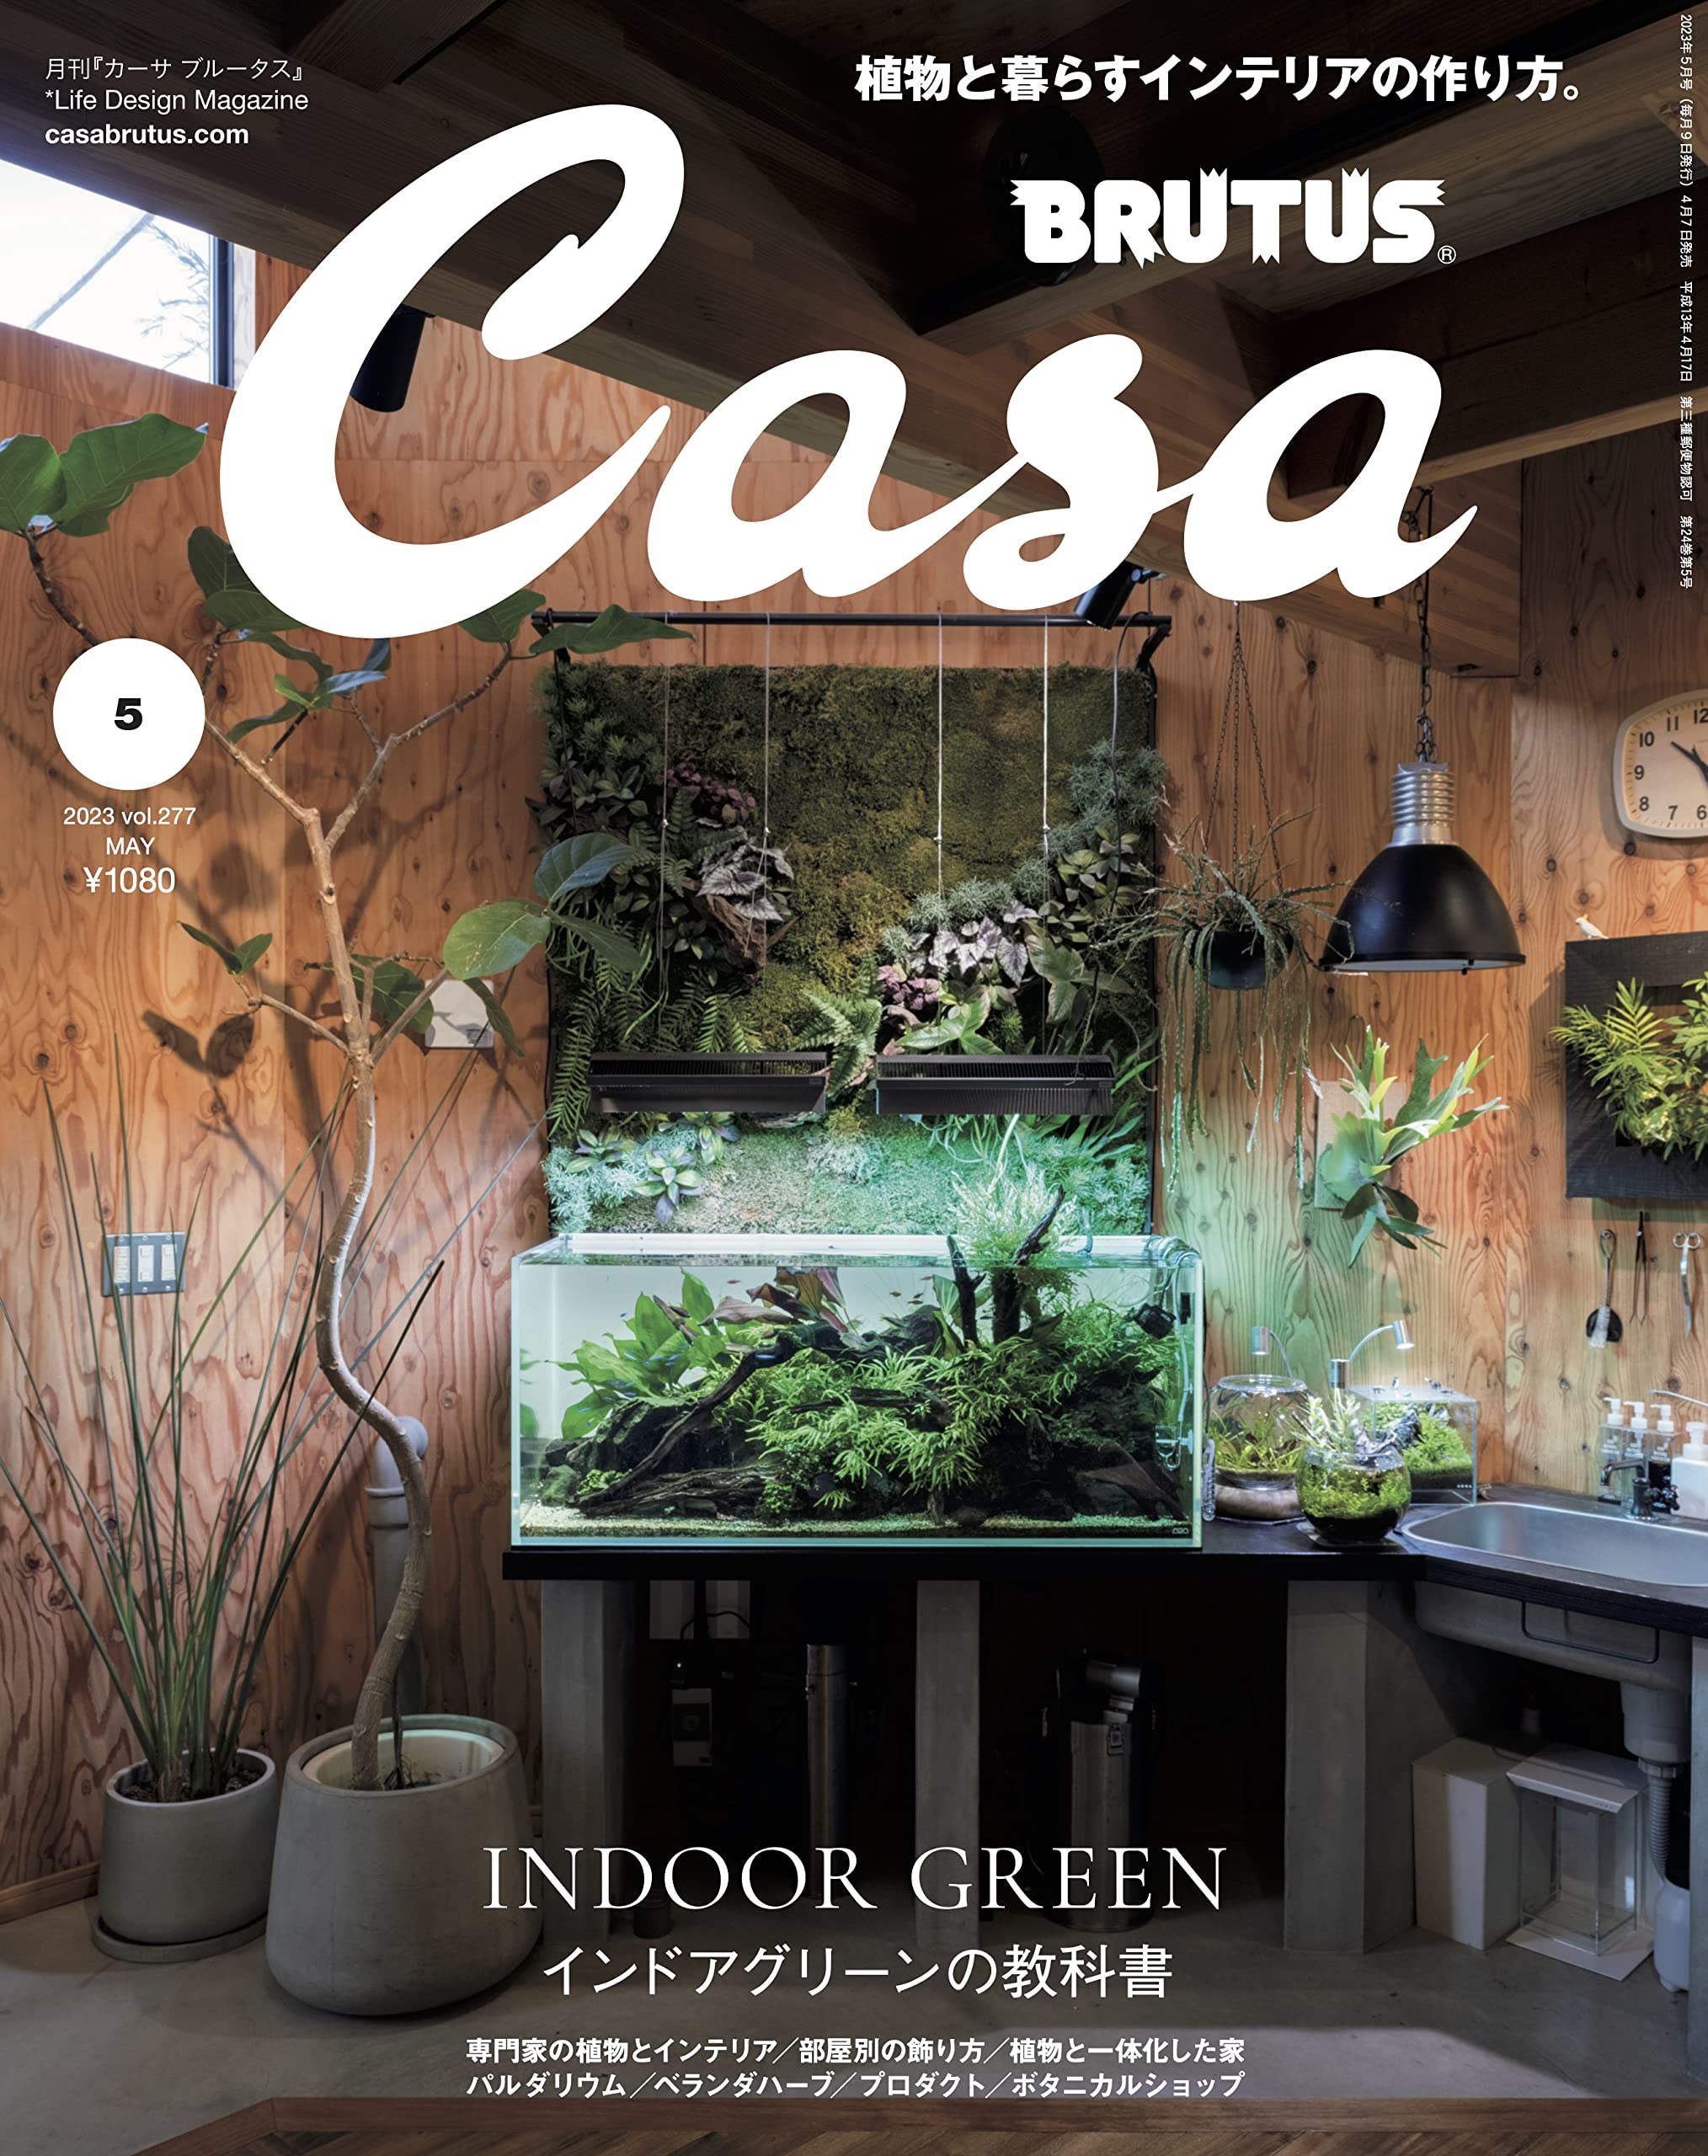 Mua Casa BRUTUS(カーサ ブルータス) 2023年 5月号[インドアグリーンの教科書] trên Amazon Nhật chính  hãng 2023 Giaonhan247